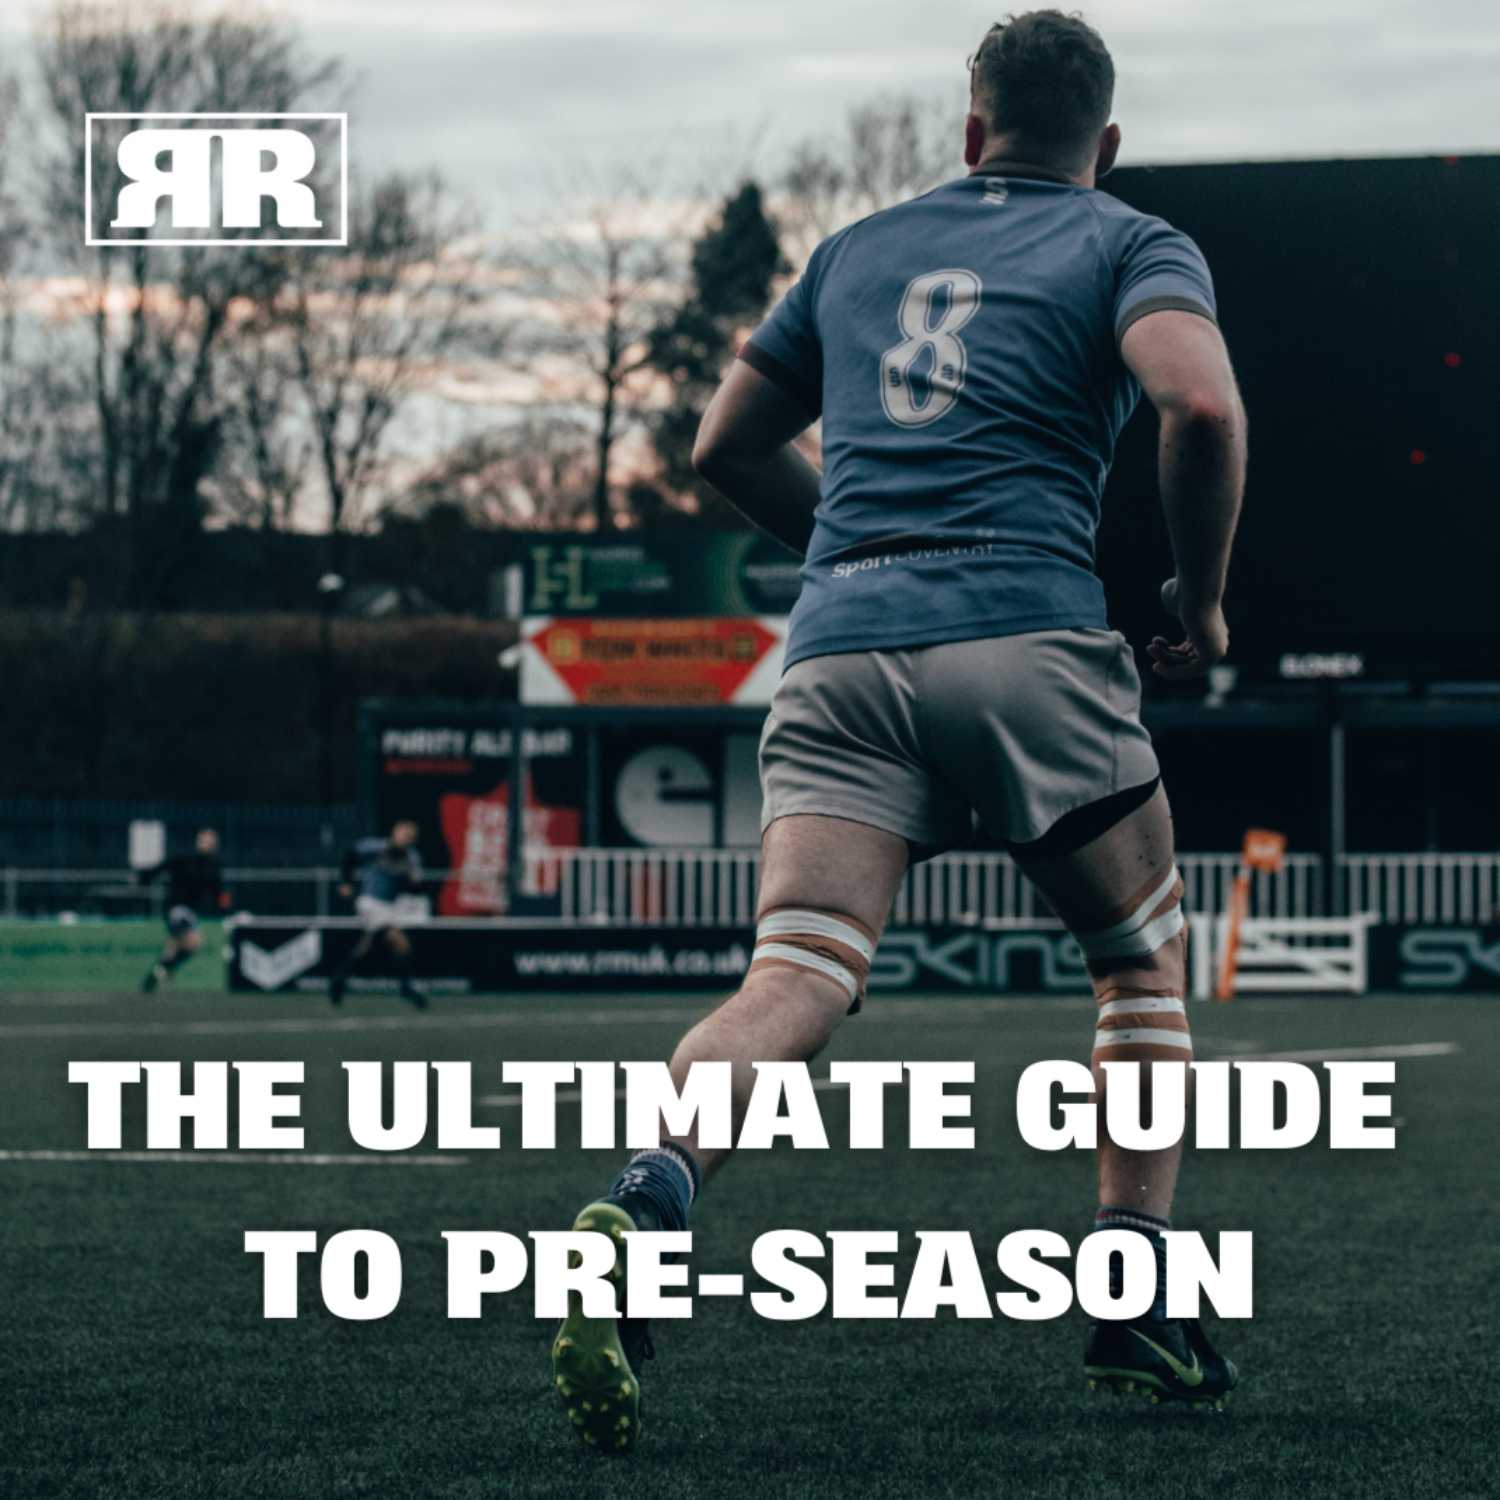 The Ultimate Guide to Pre-Season